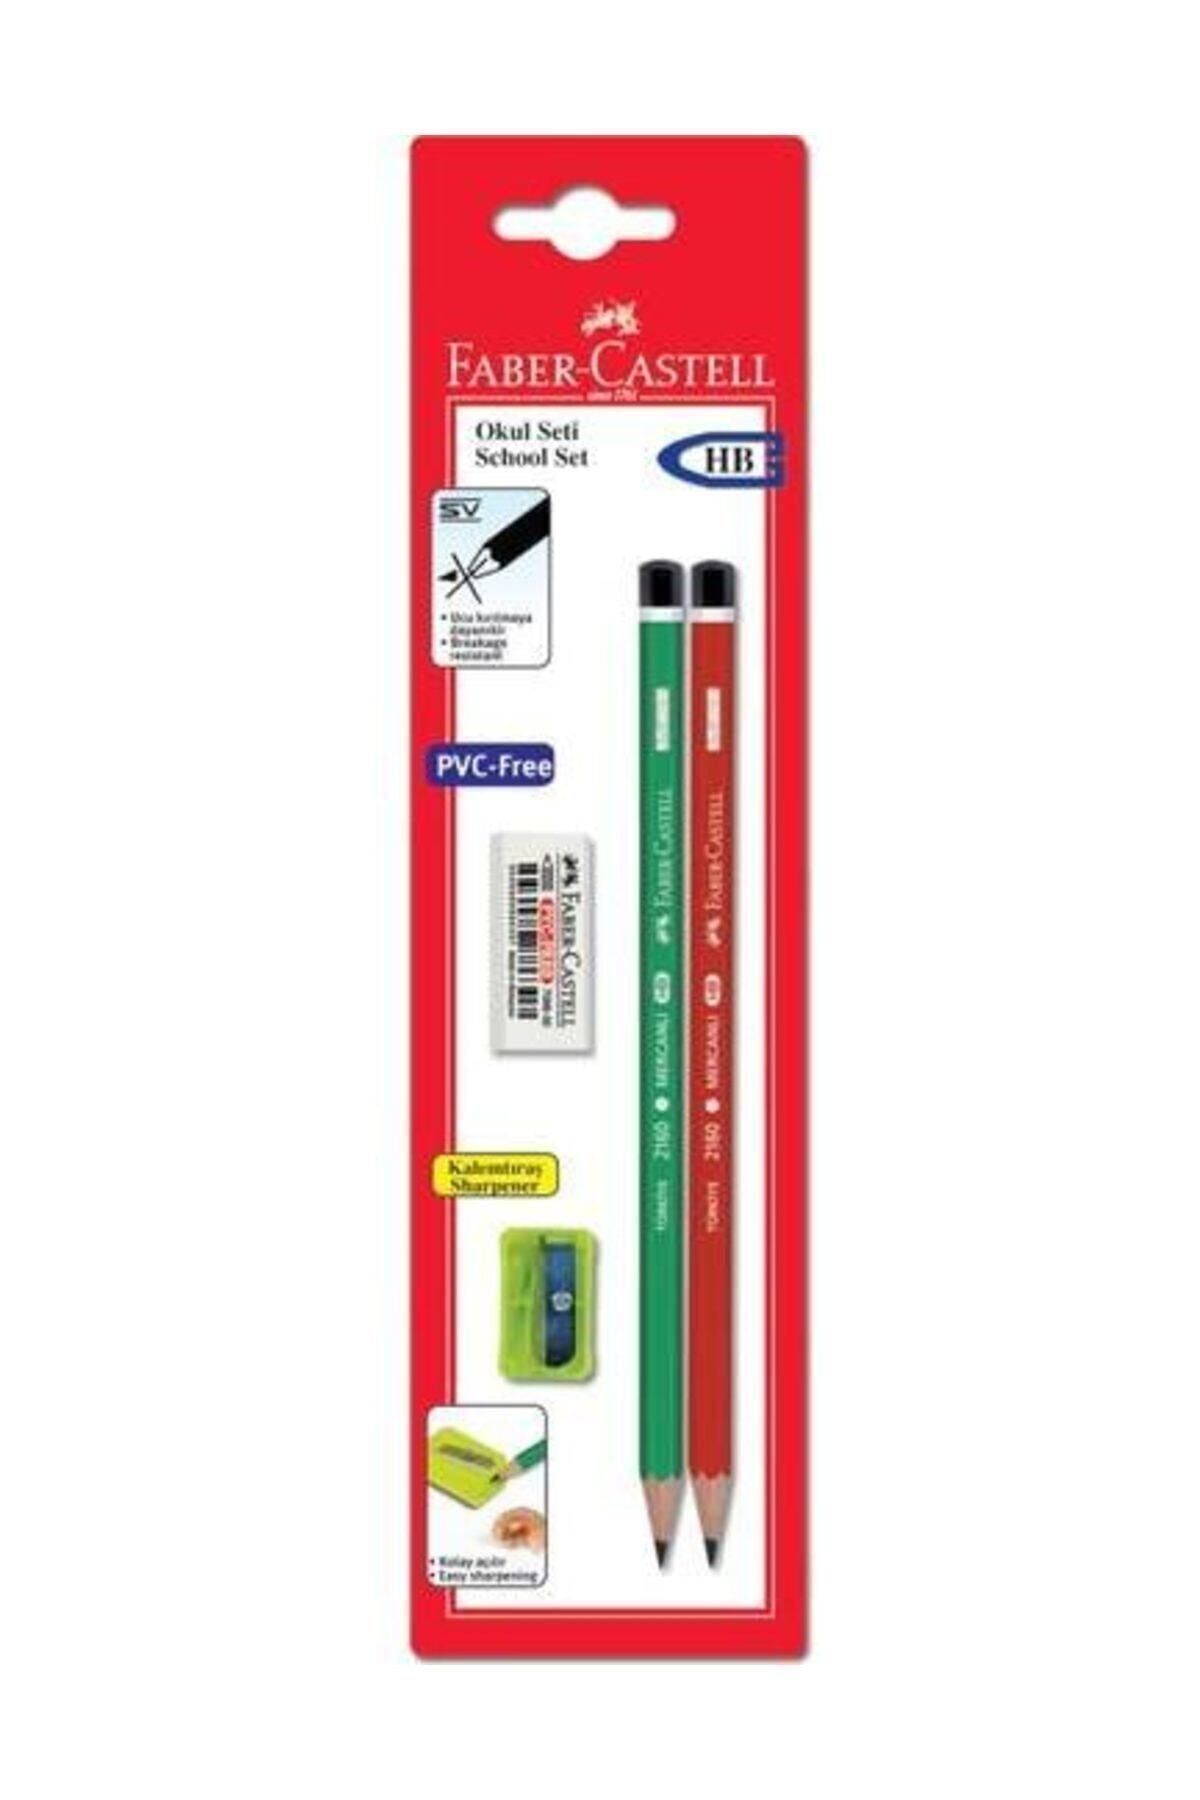 Faber Castell Okul Seti 2 Kurşun Kalem+Silgi+Kalem Traş